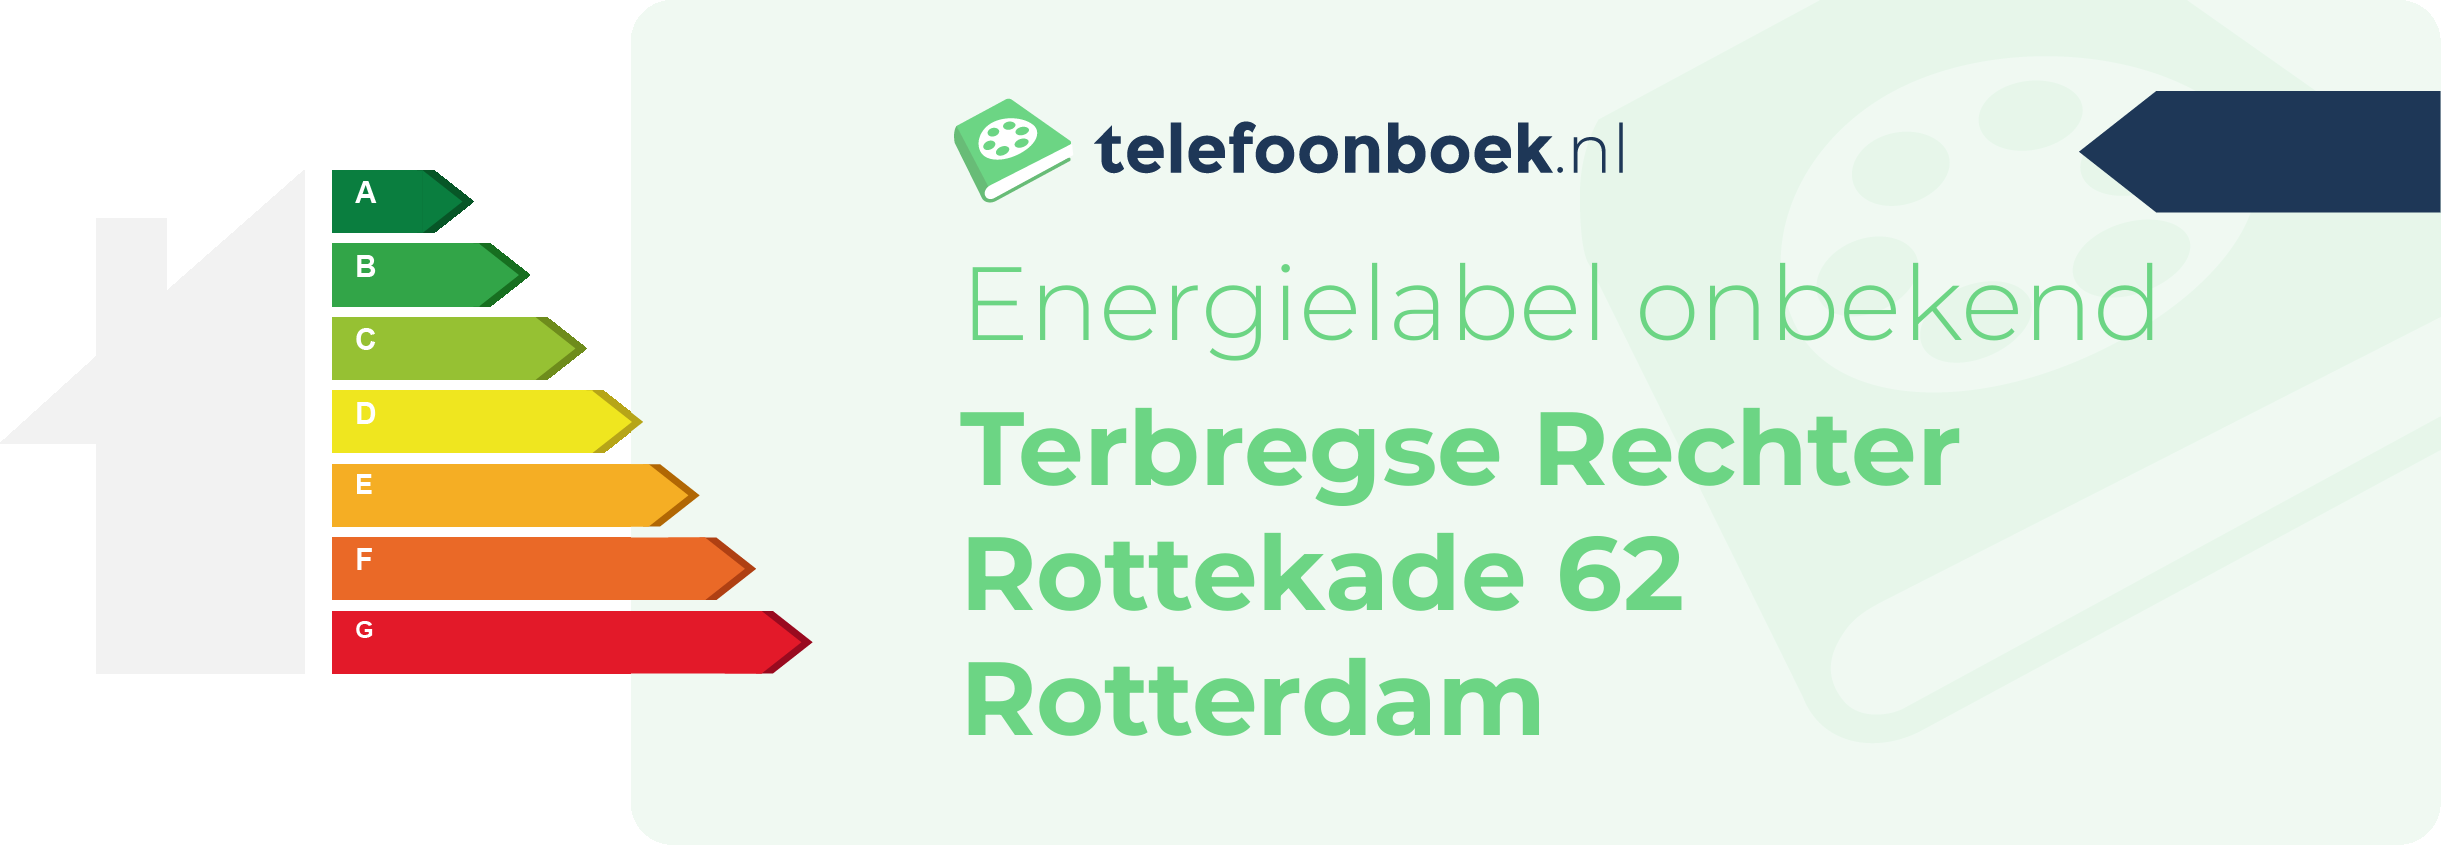 Energielabel Terbregse Rechter Rottekade 62 Rotterdam